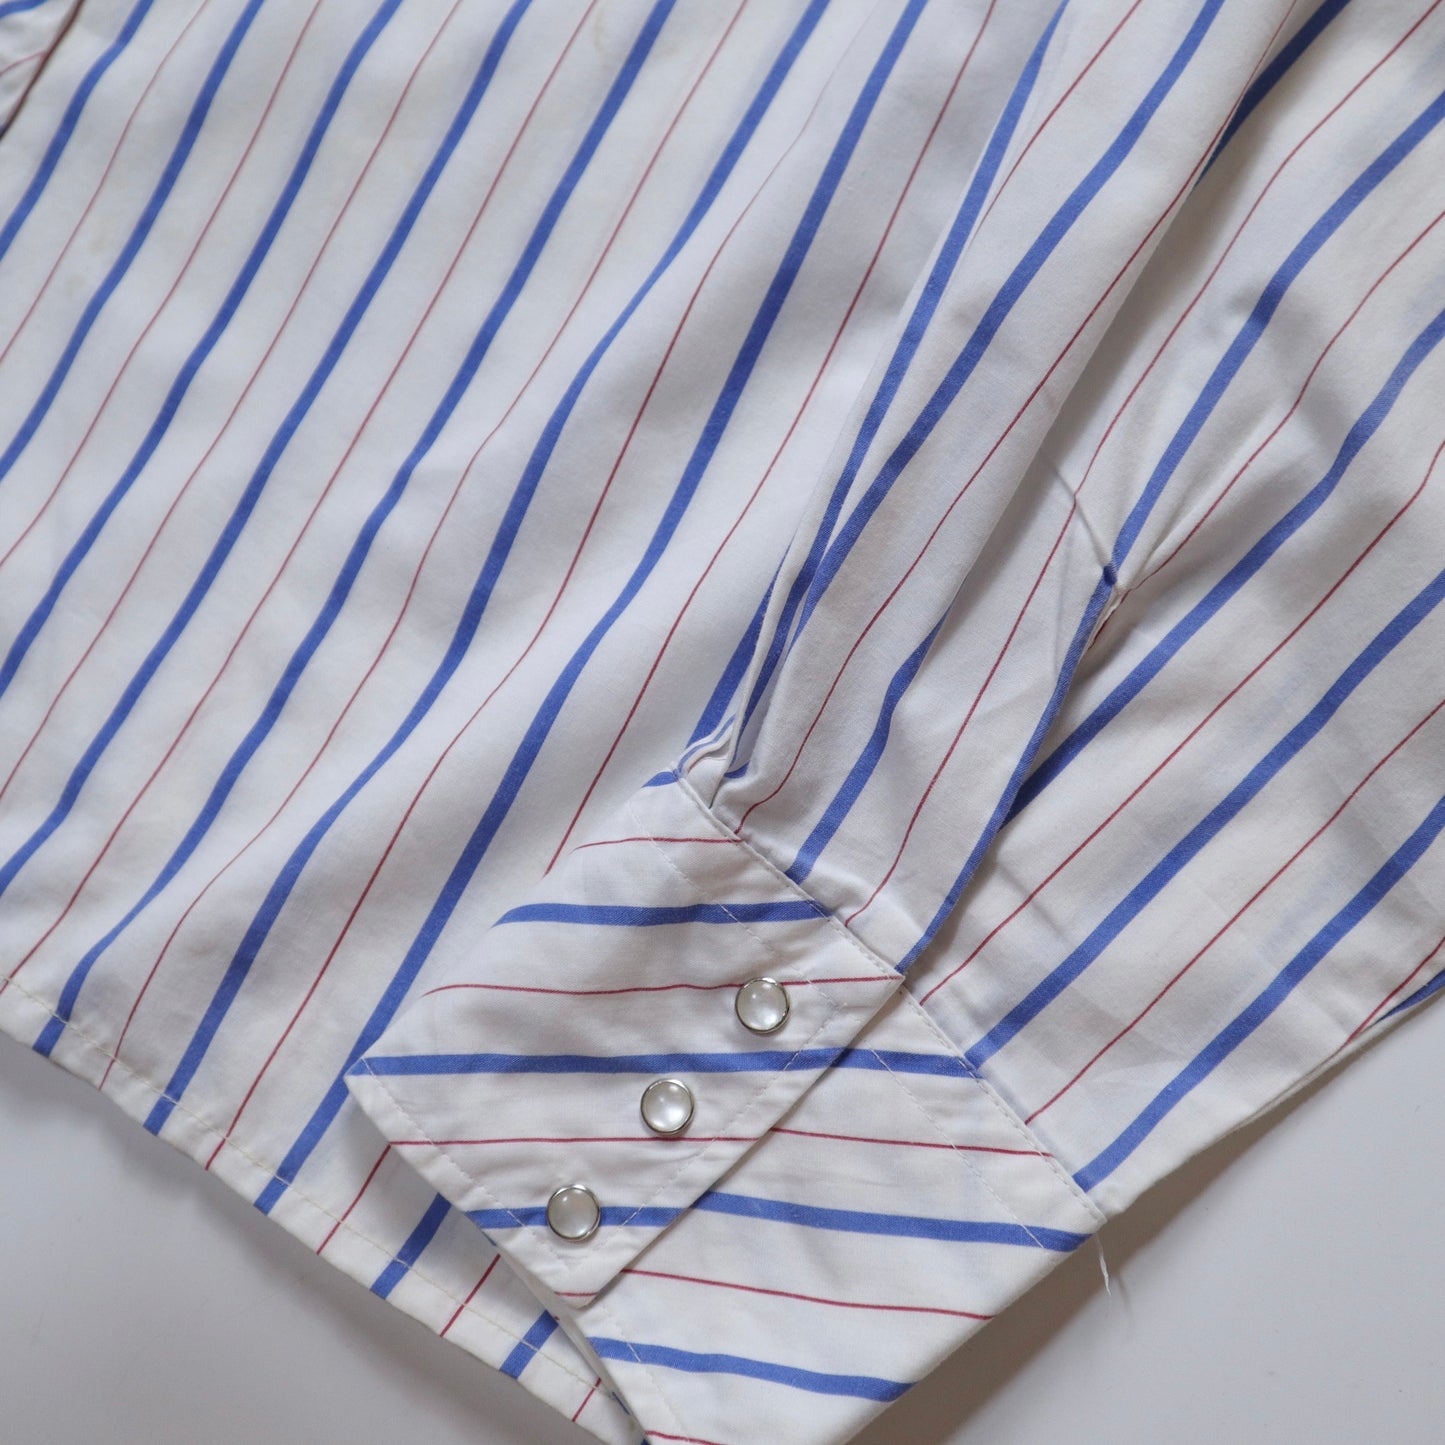 1970s Korean-made Bar-m Rancher blue and white striped western shirt